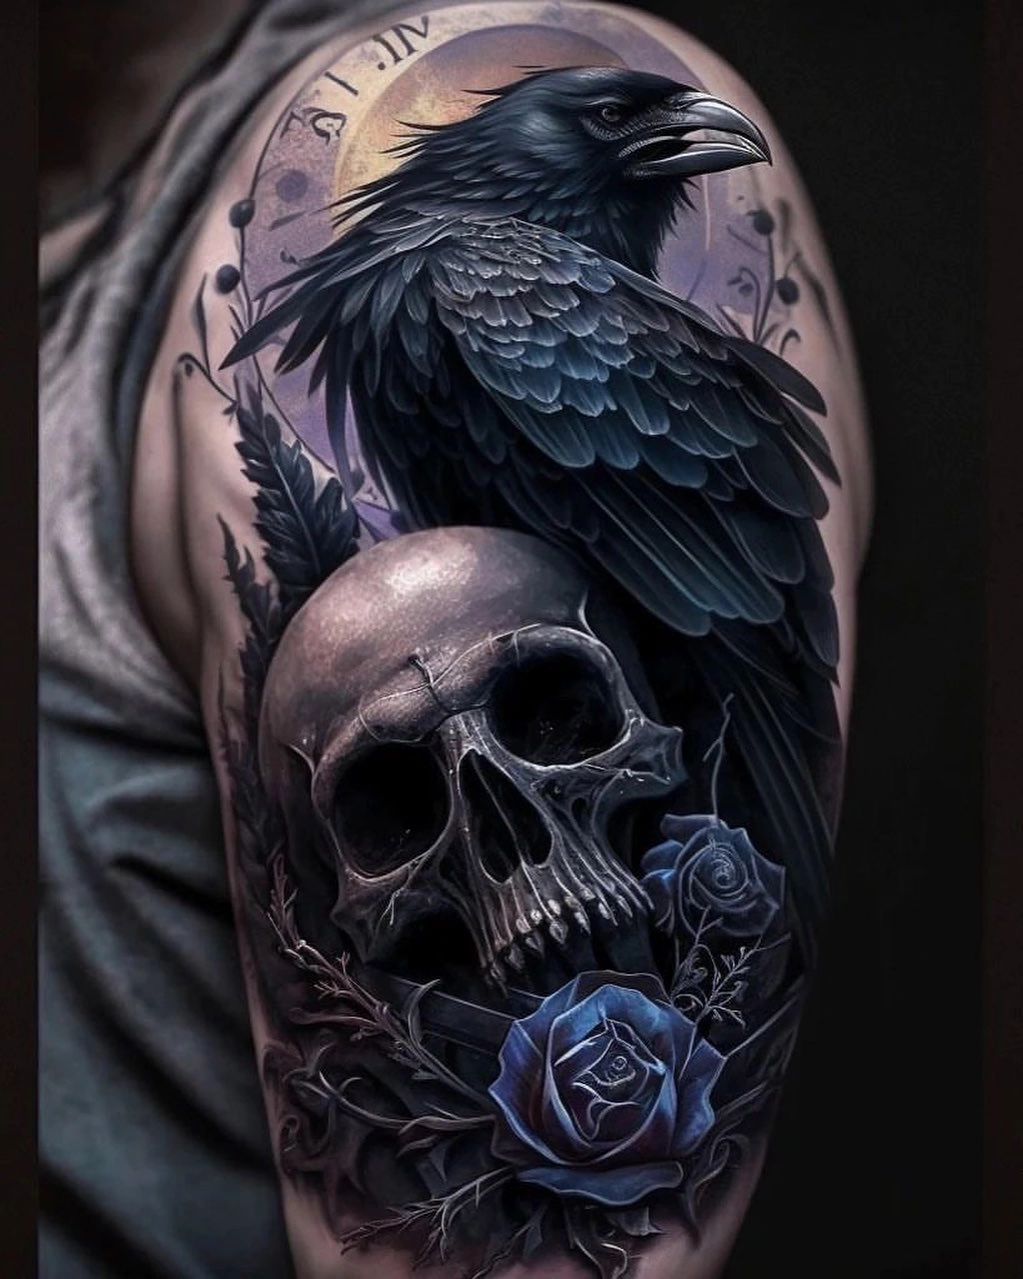 amazing skull sleeve tattoo by skulls.247